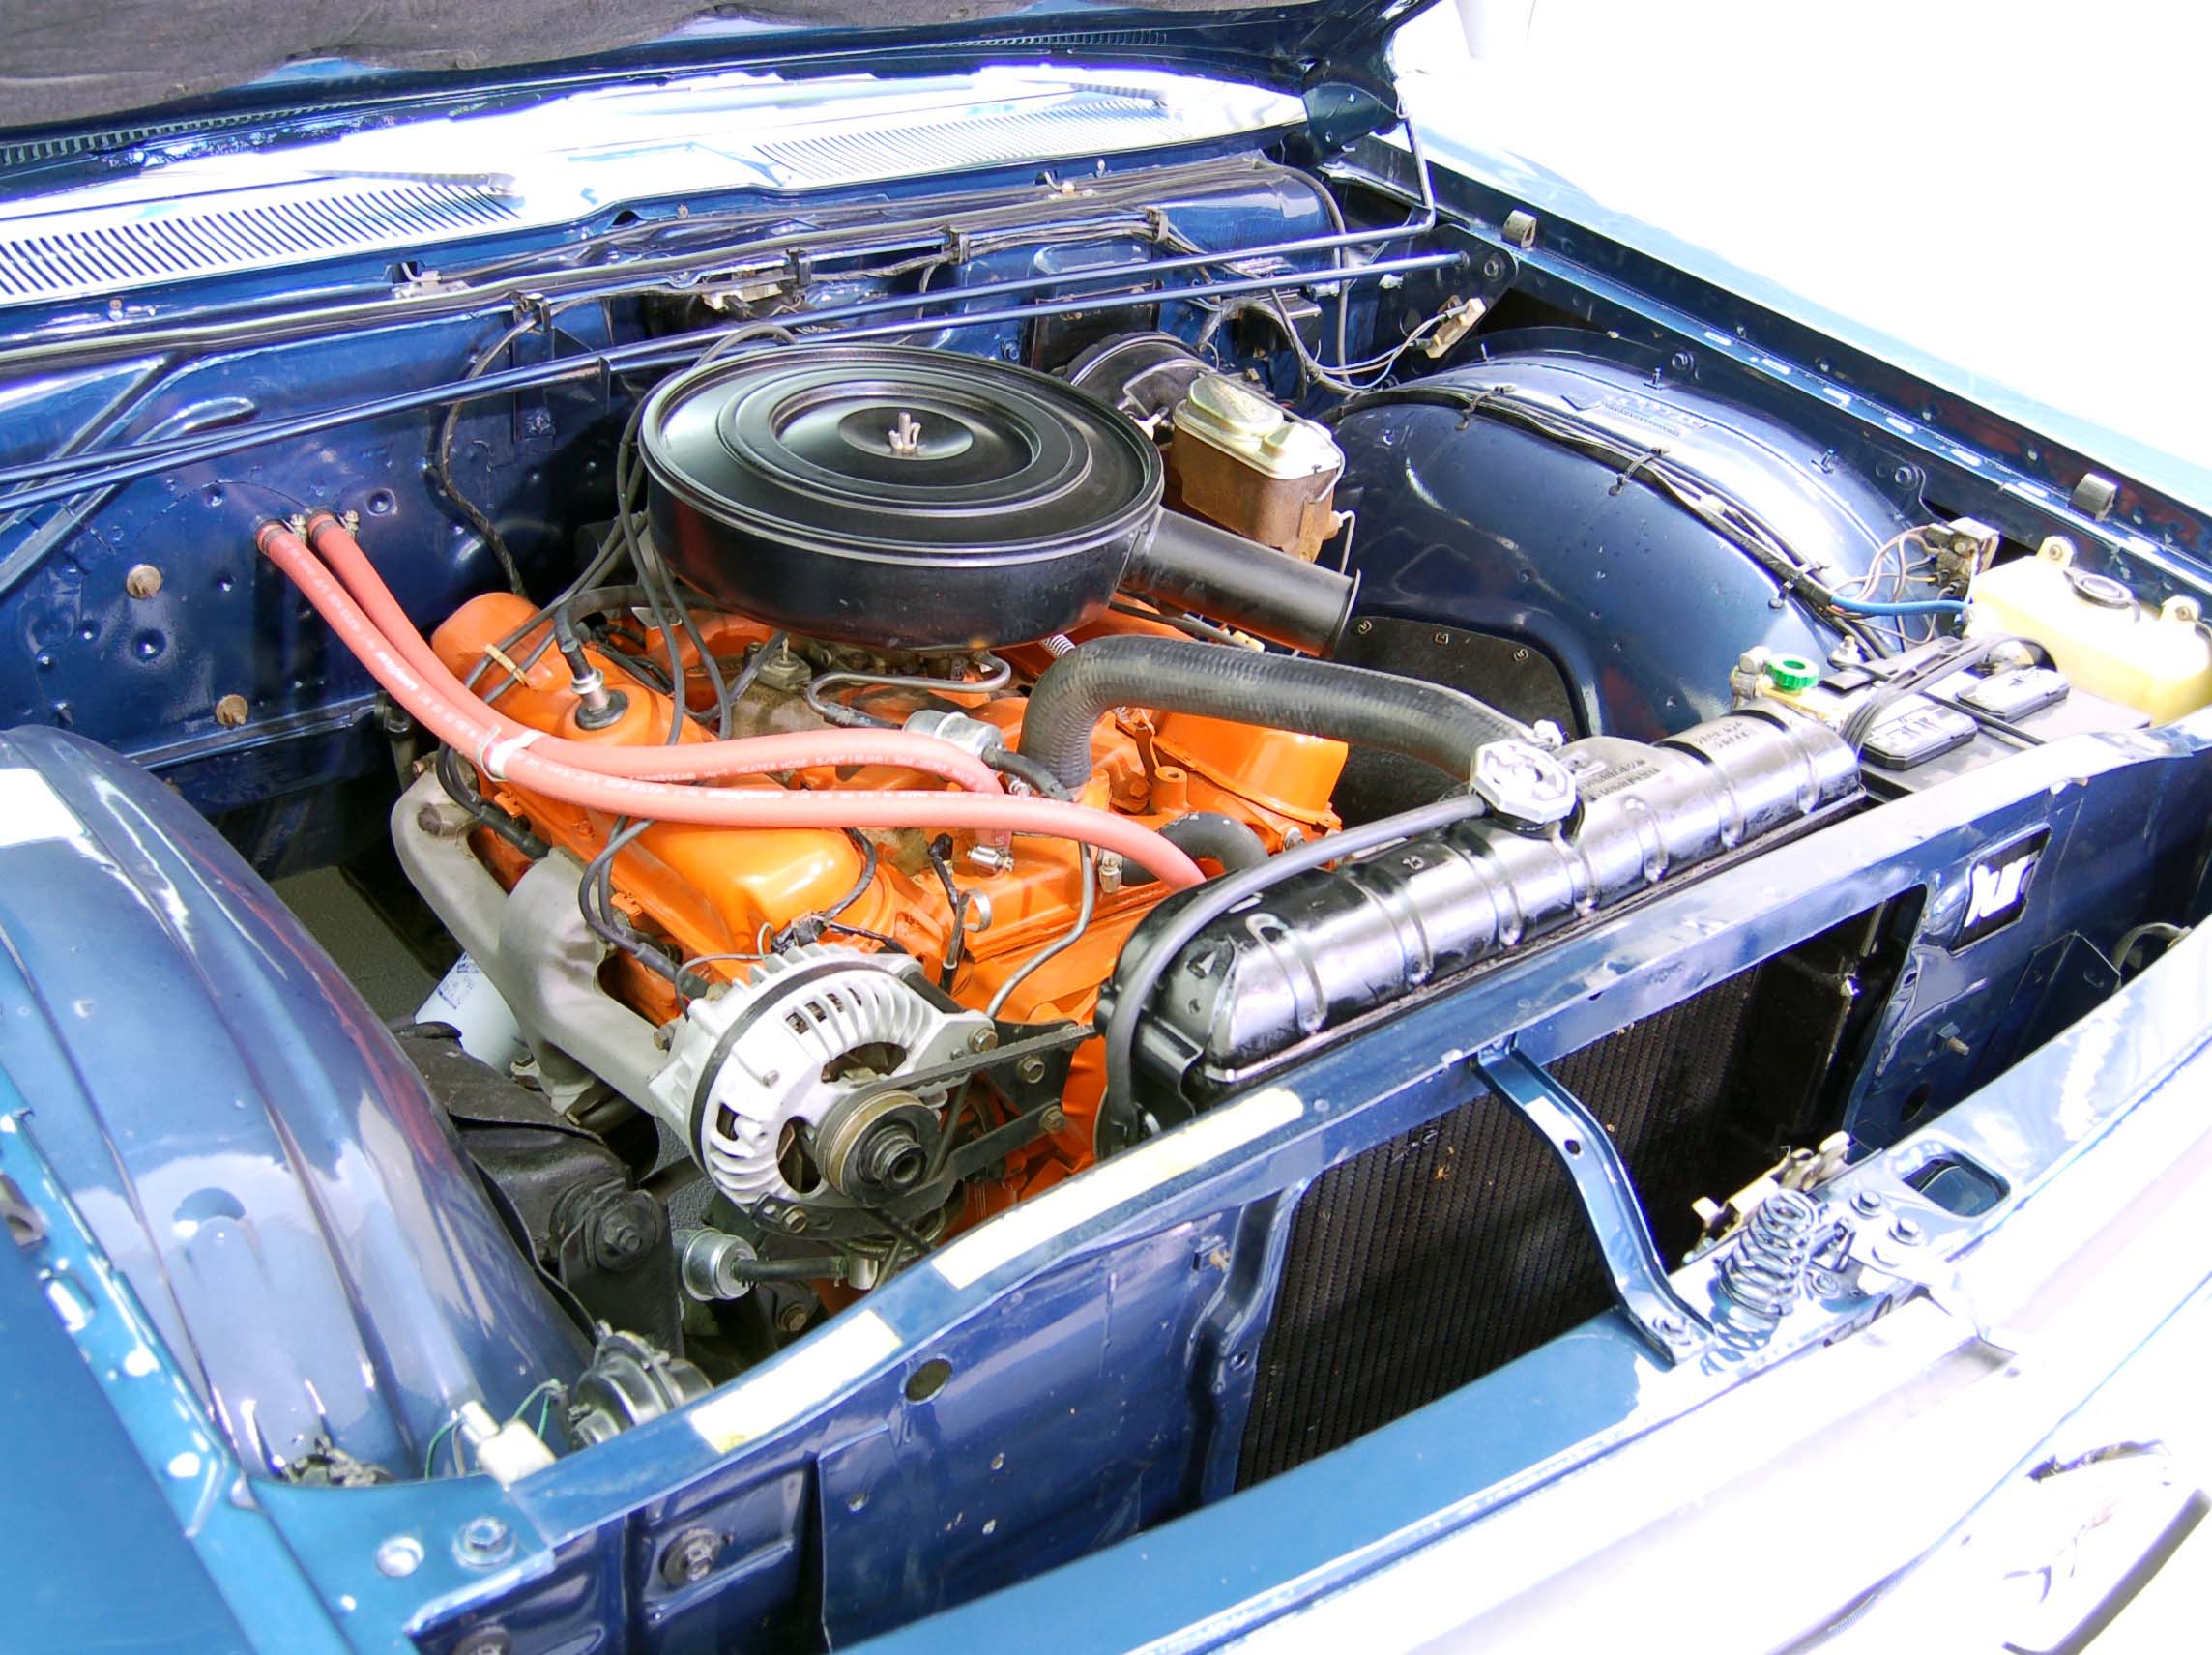 1966 Plymouth Fury III